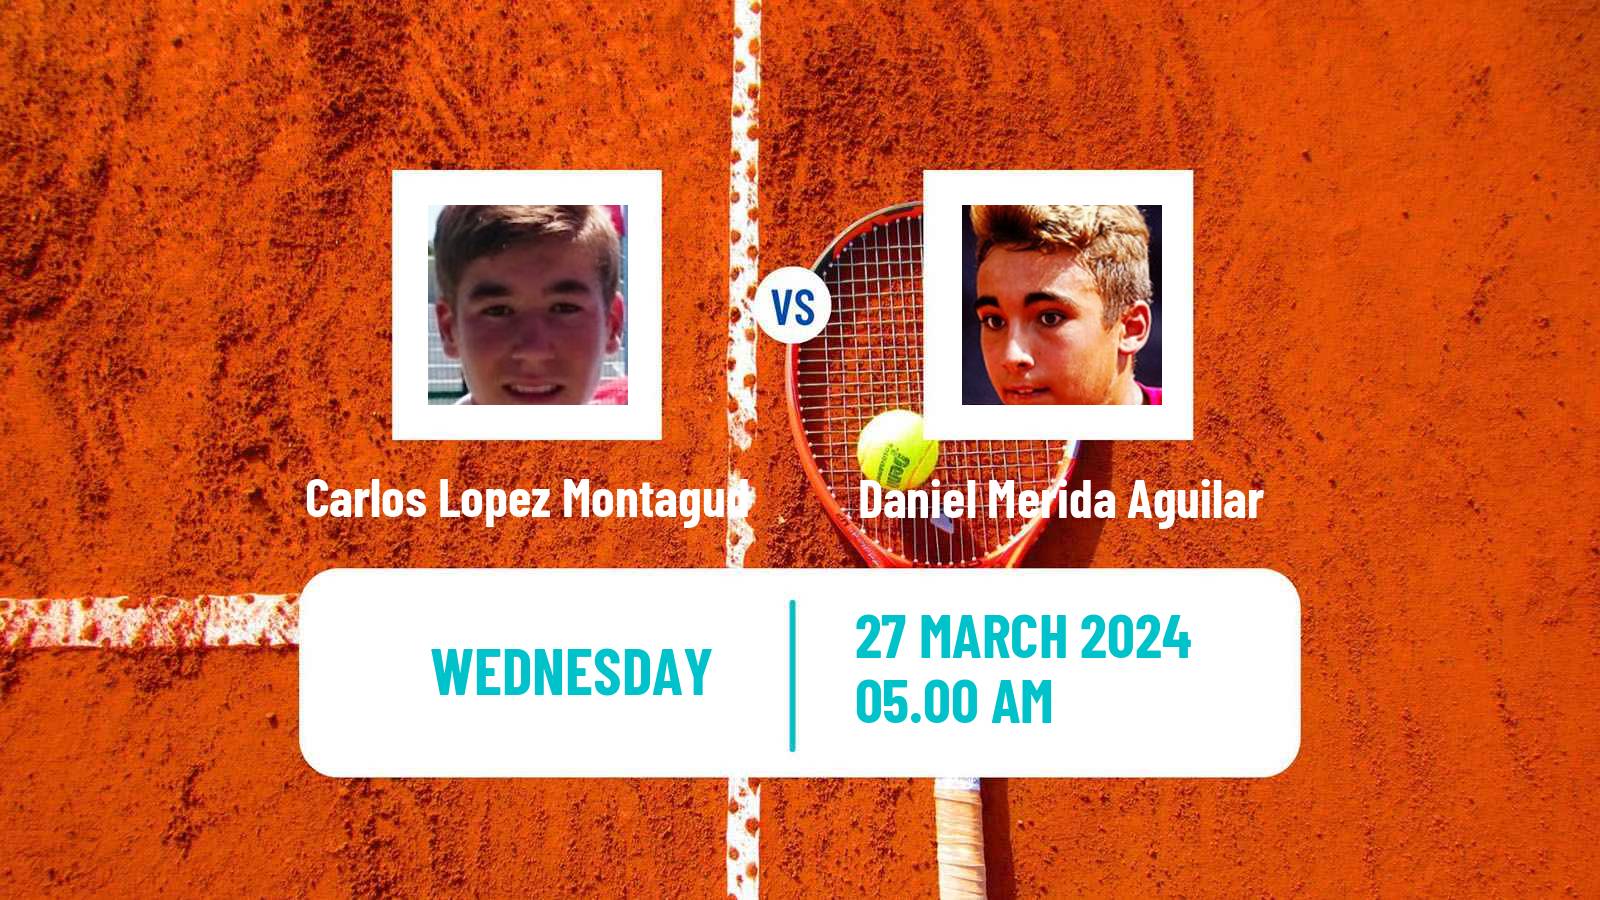 Tennis ITF M25 Tarragona Men Carlos Lopez Montagud - Daniel Merida Aguilar